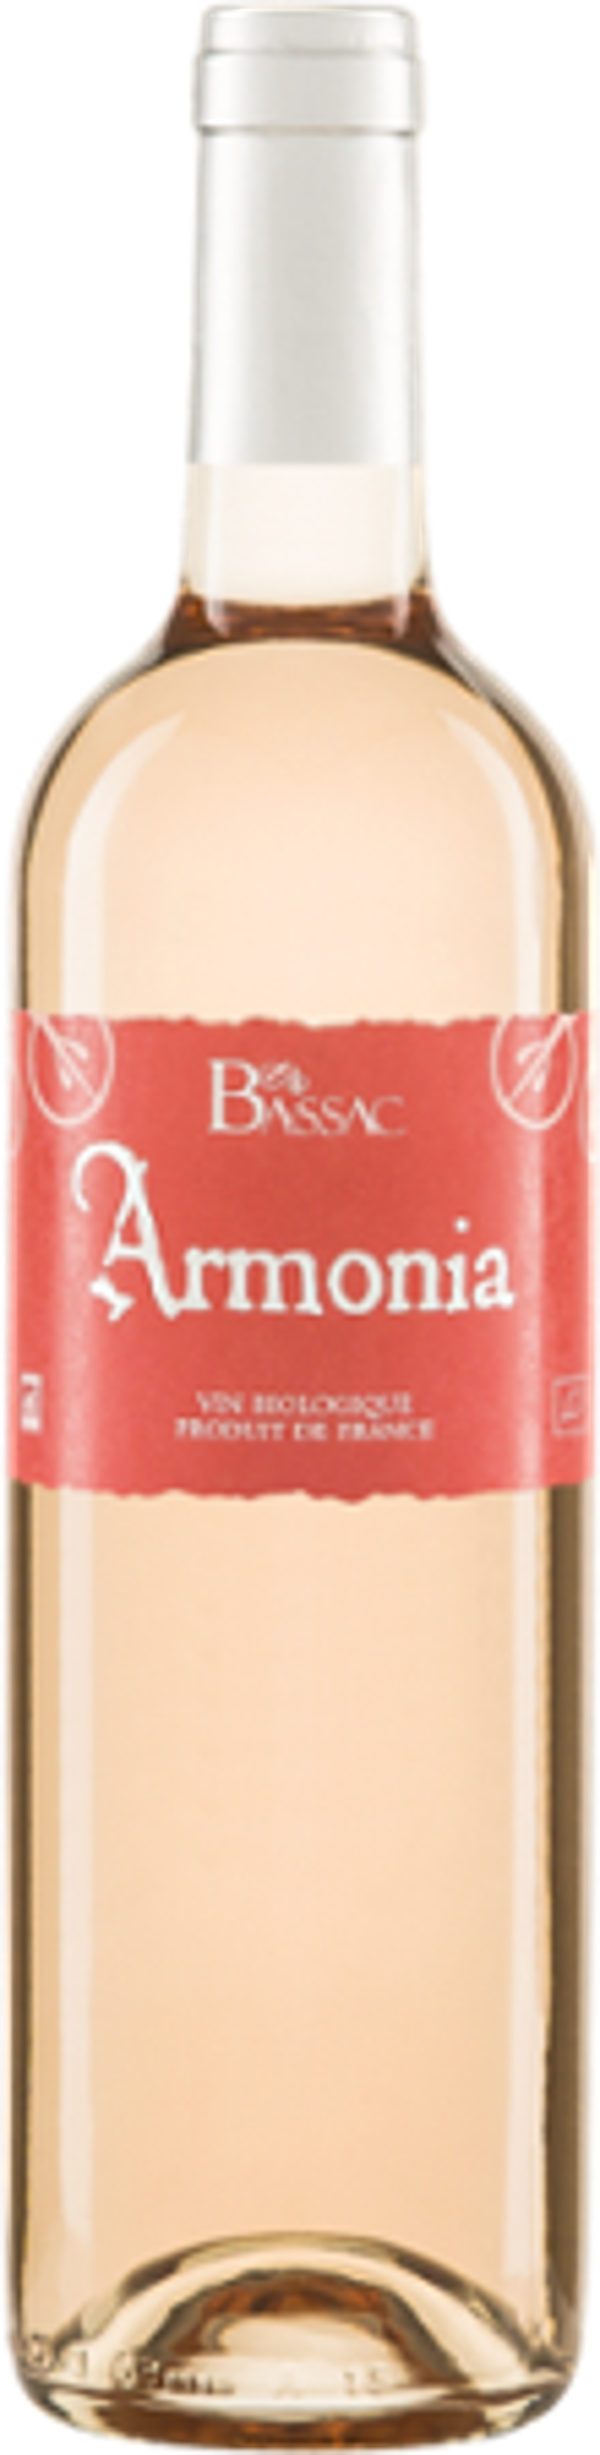 Produktfoto zu ARMONIA Rosé Domaine Bassac